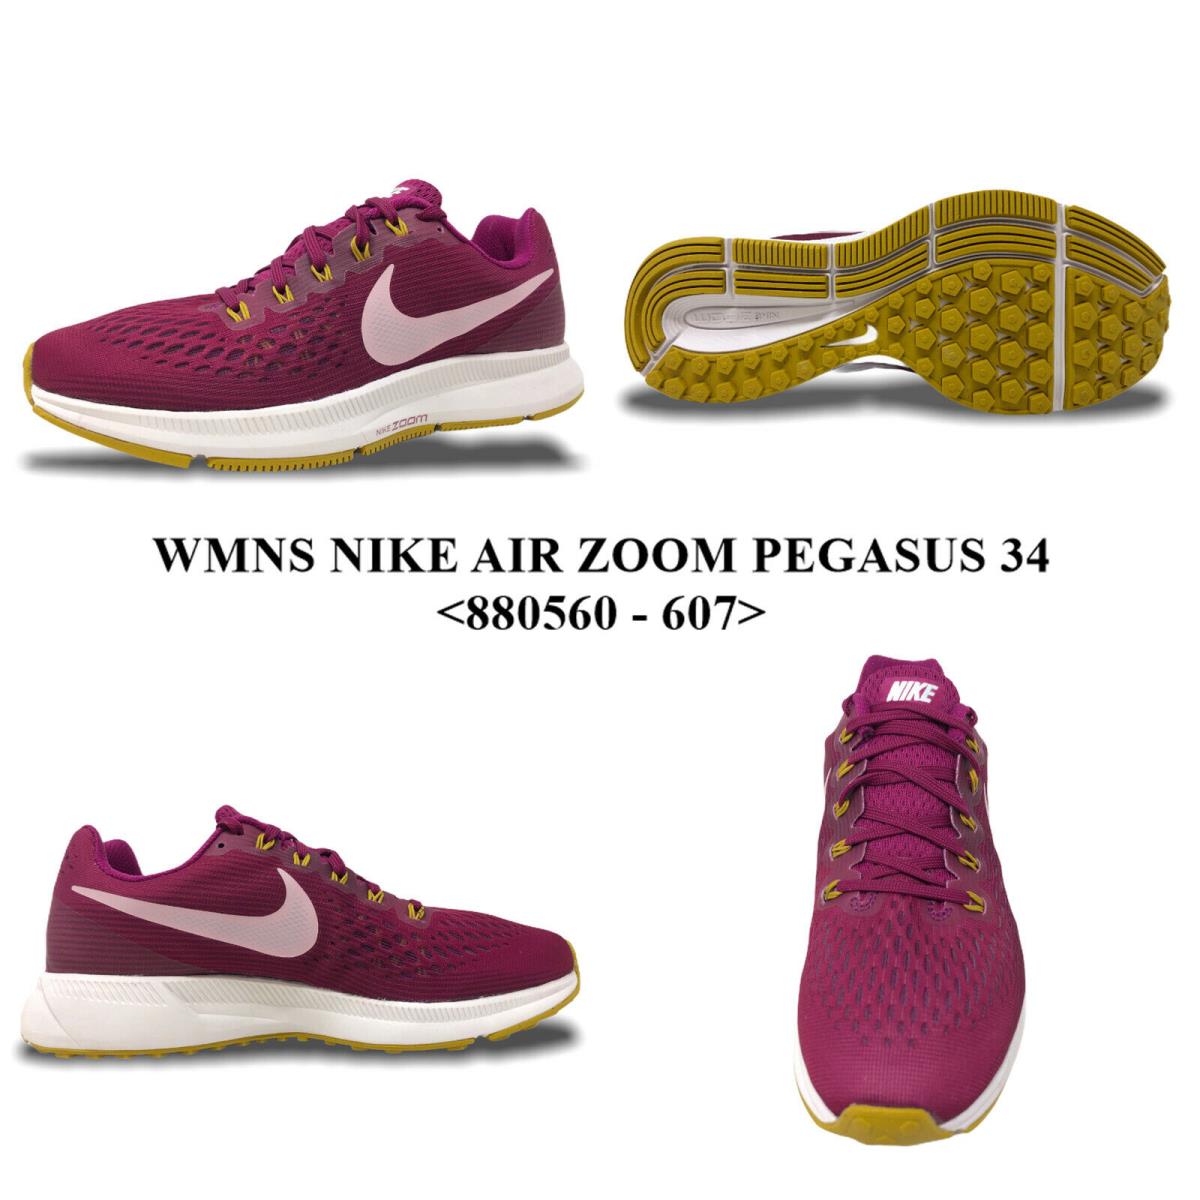 Women`s Nike Air Zoom Pegasus 34 <880560 - 607> Running/casual Shoe.new with Box - TRUE BERRY/PLUM CHALK